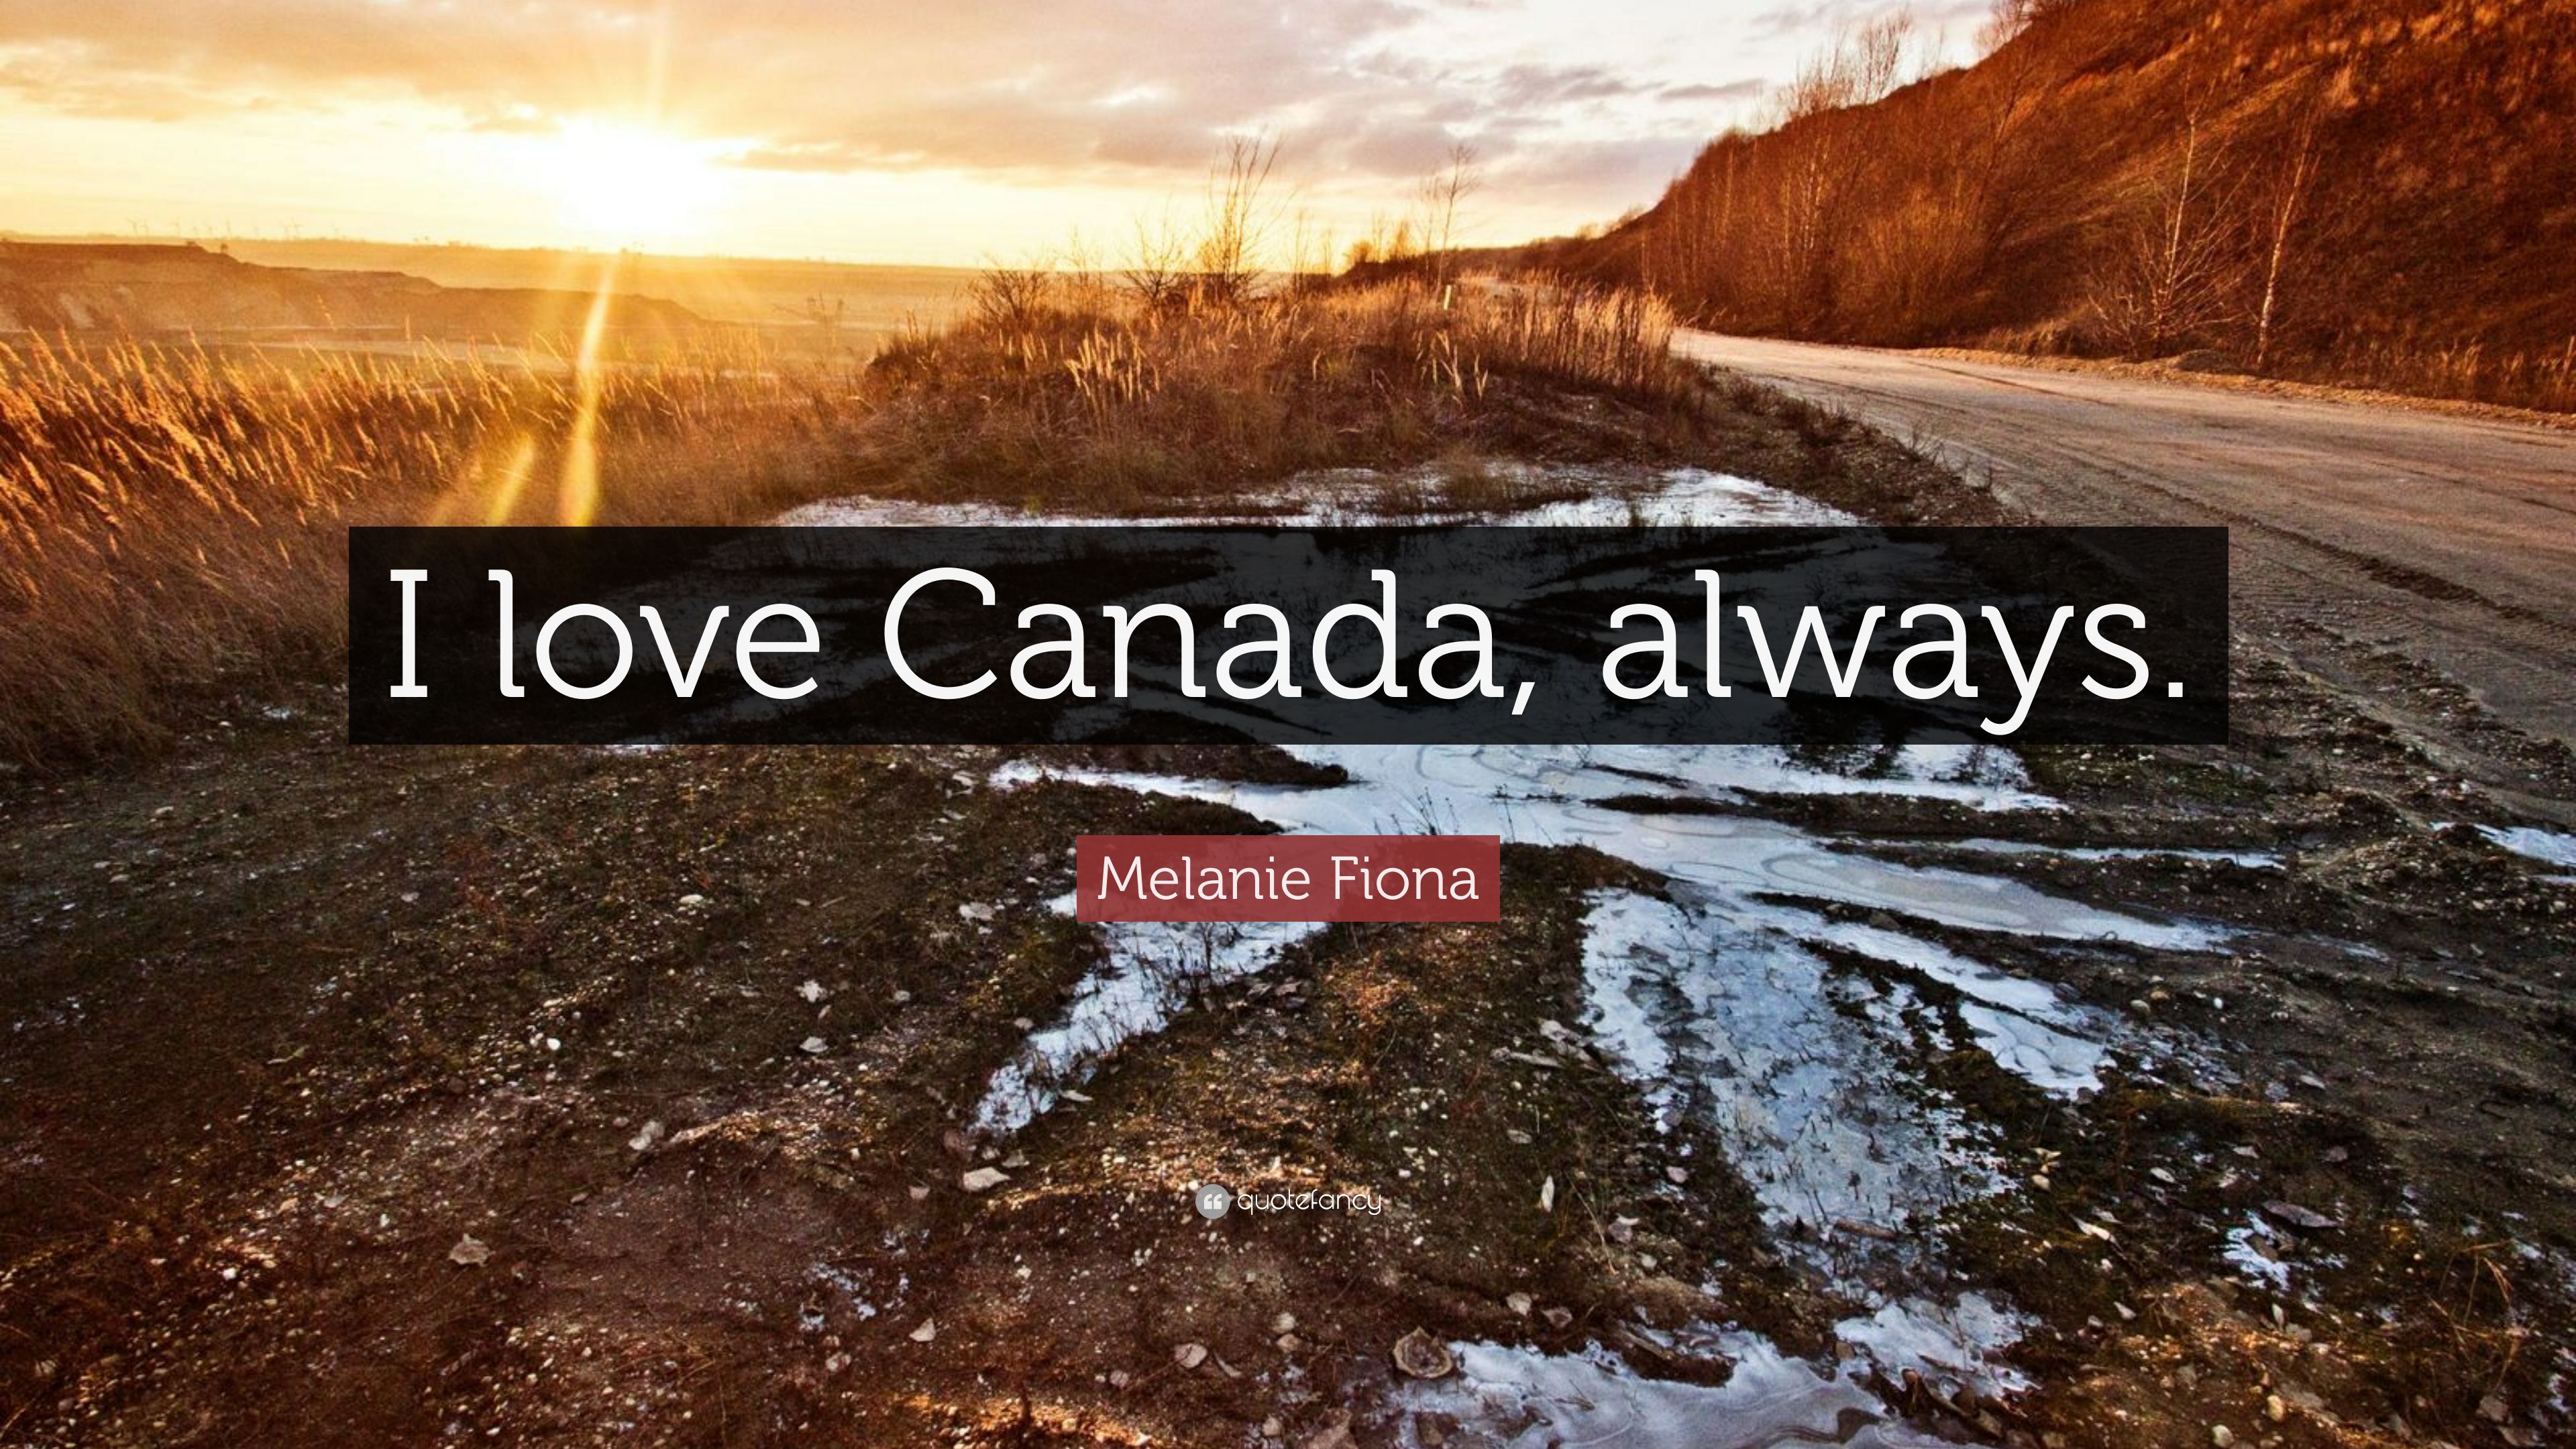 Melanie Fiona Quote: “I love Canada, always.” (7 wallpaper)